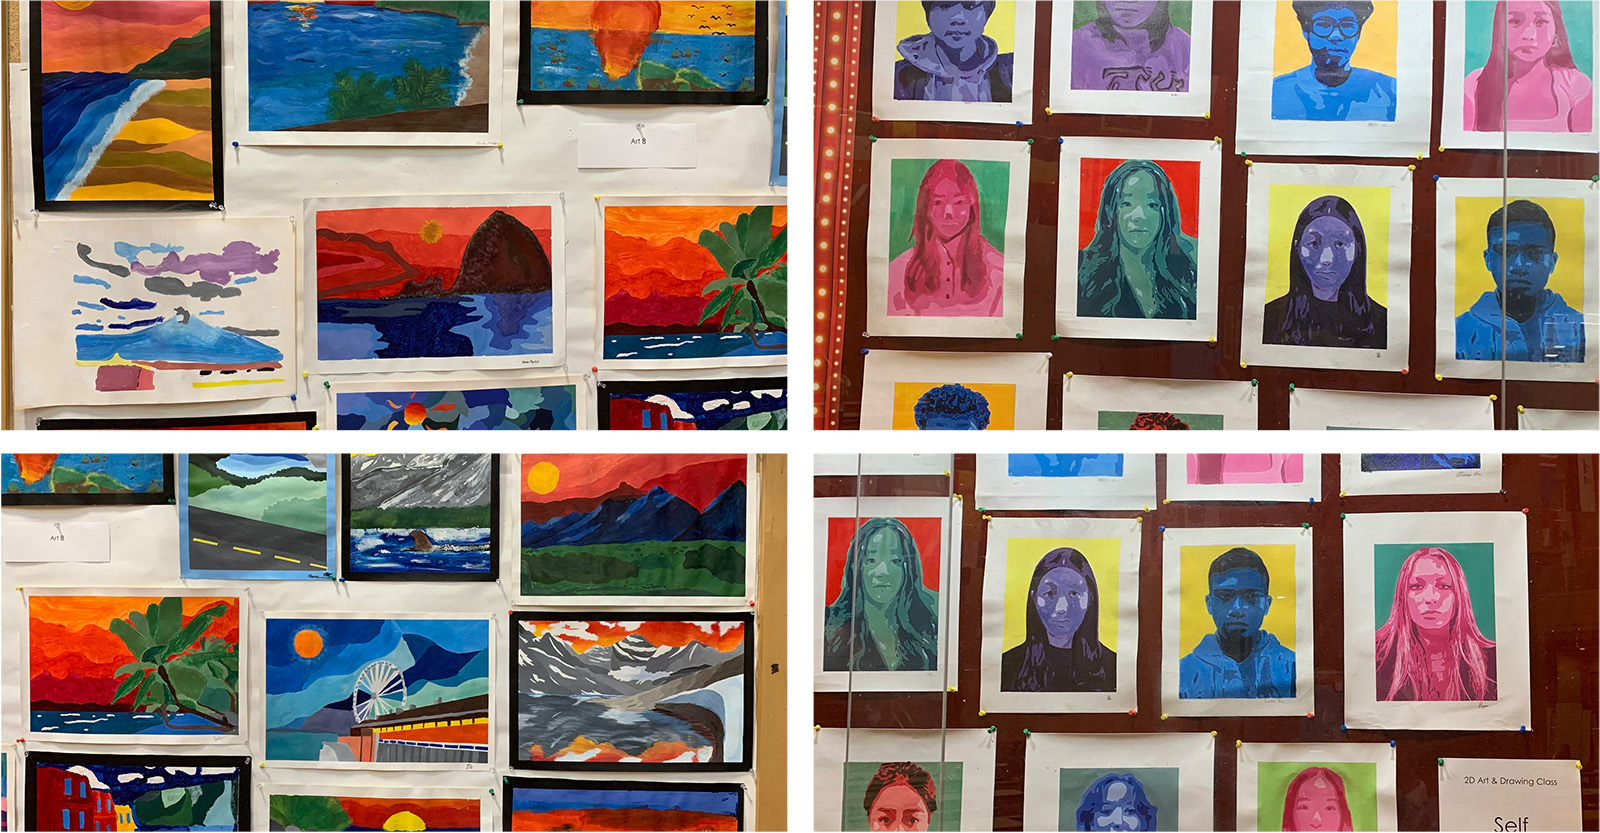 Student art portraits and artistic landscape paintings